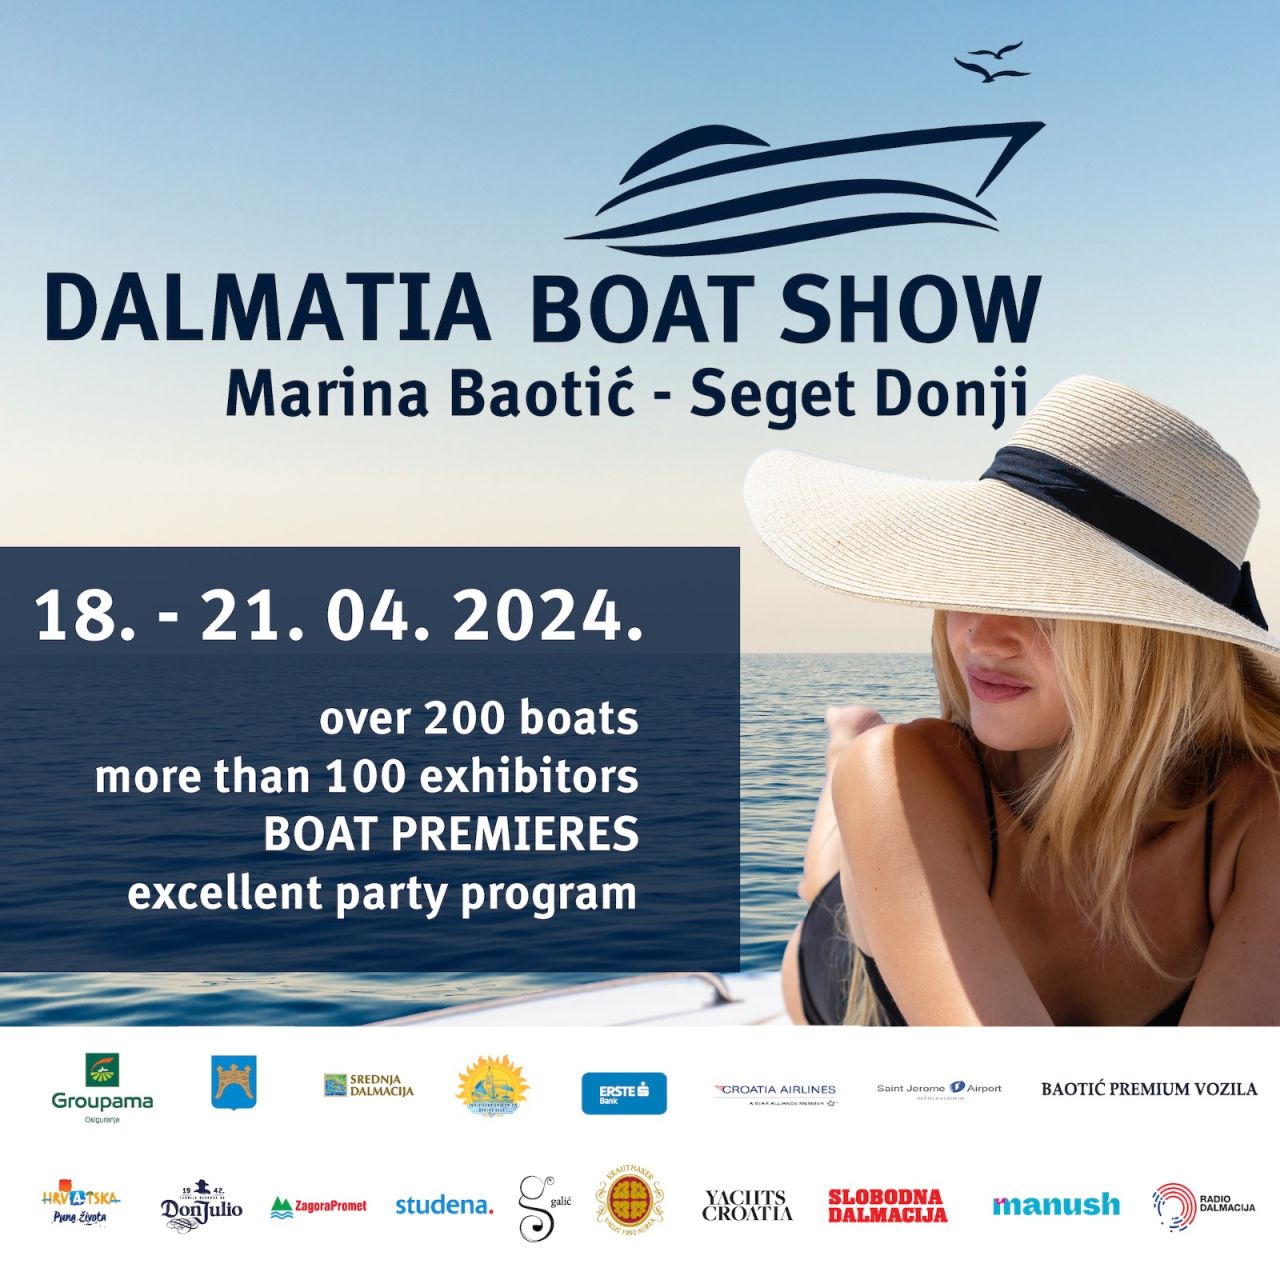 Dalmatia boat show 2024 announcement poster